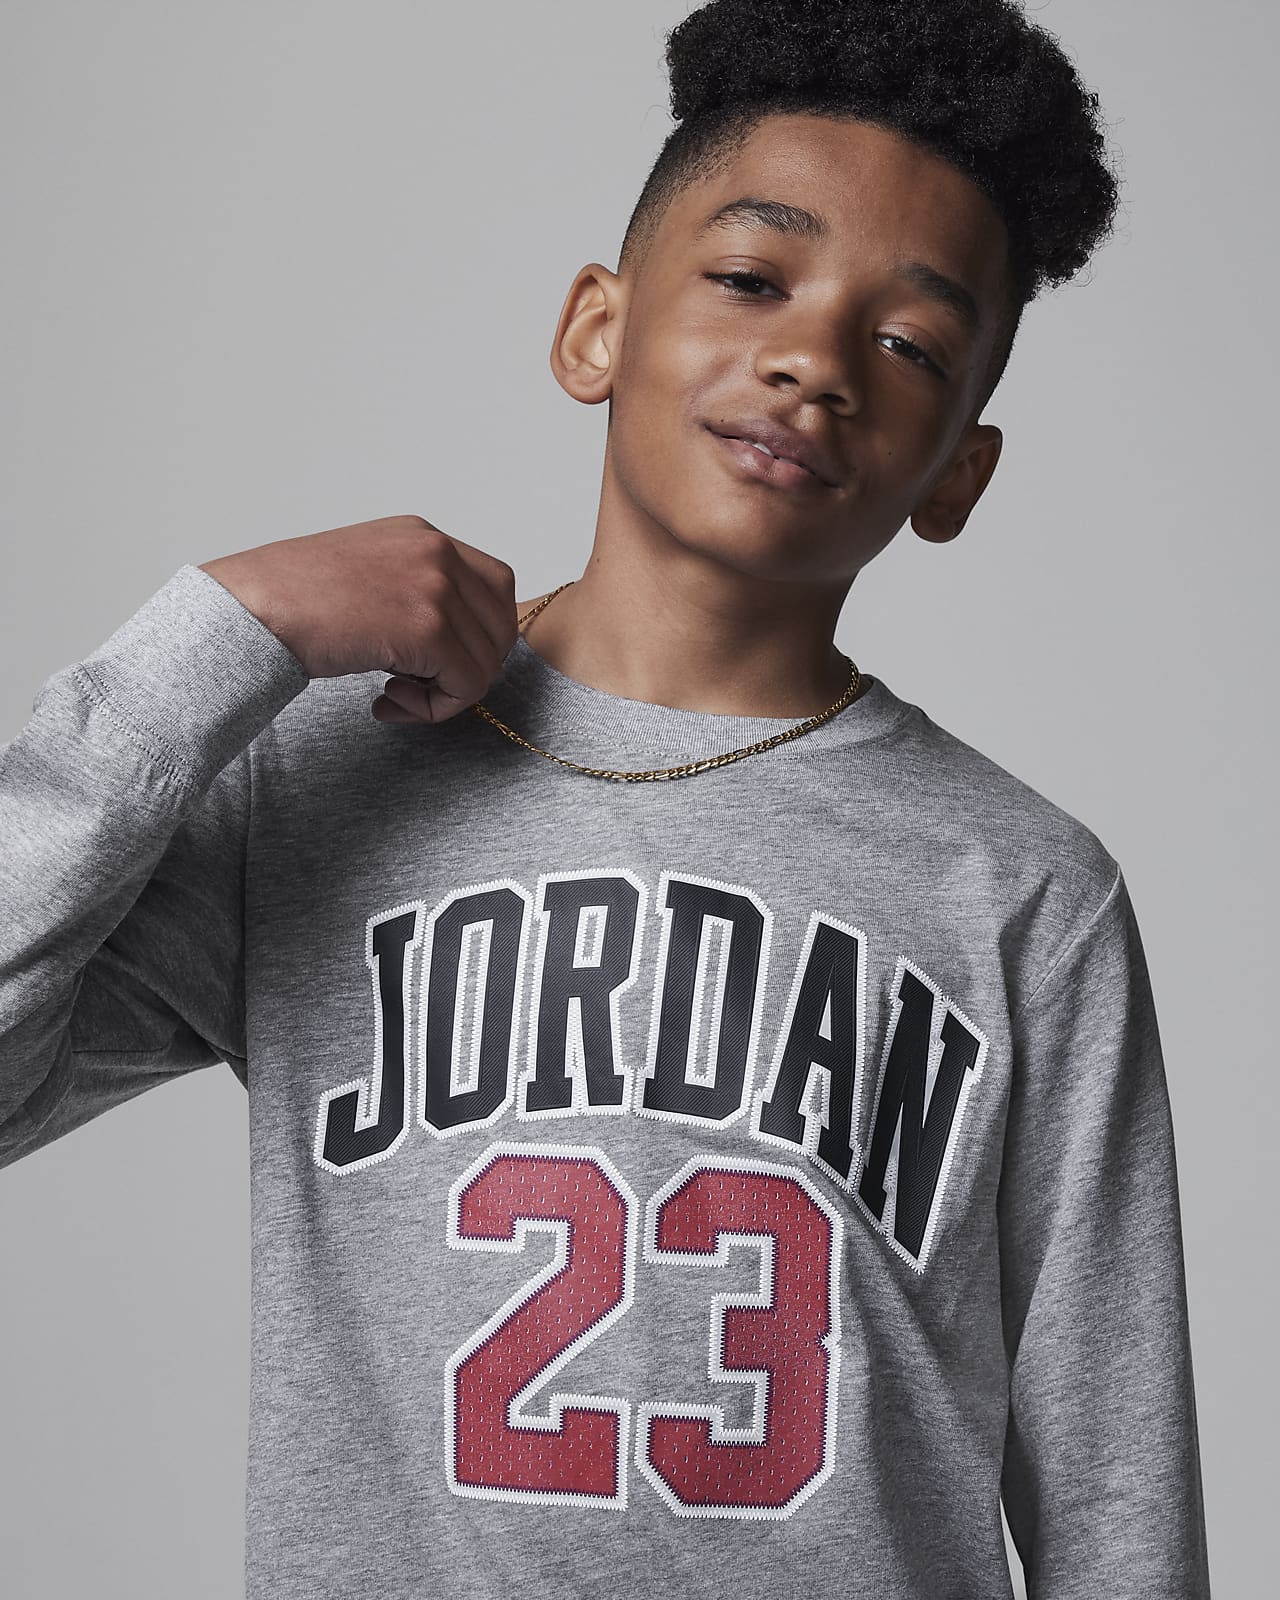 Camiseta Jordan 23 Grey para niño